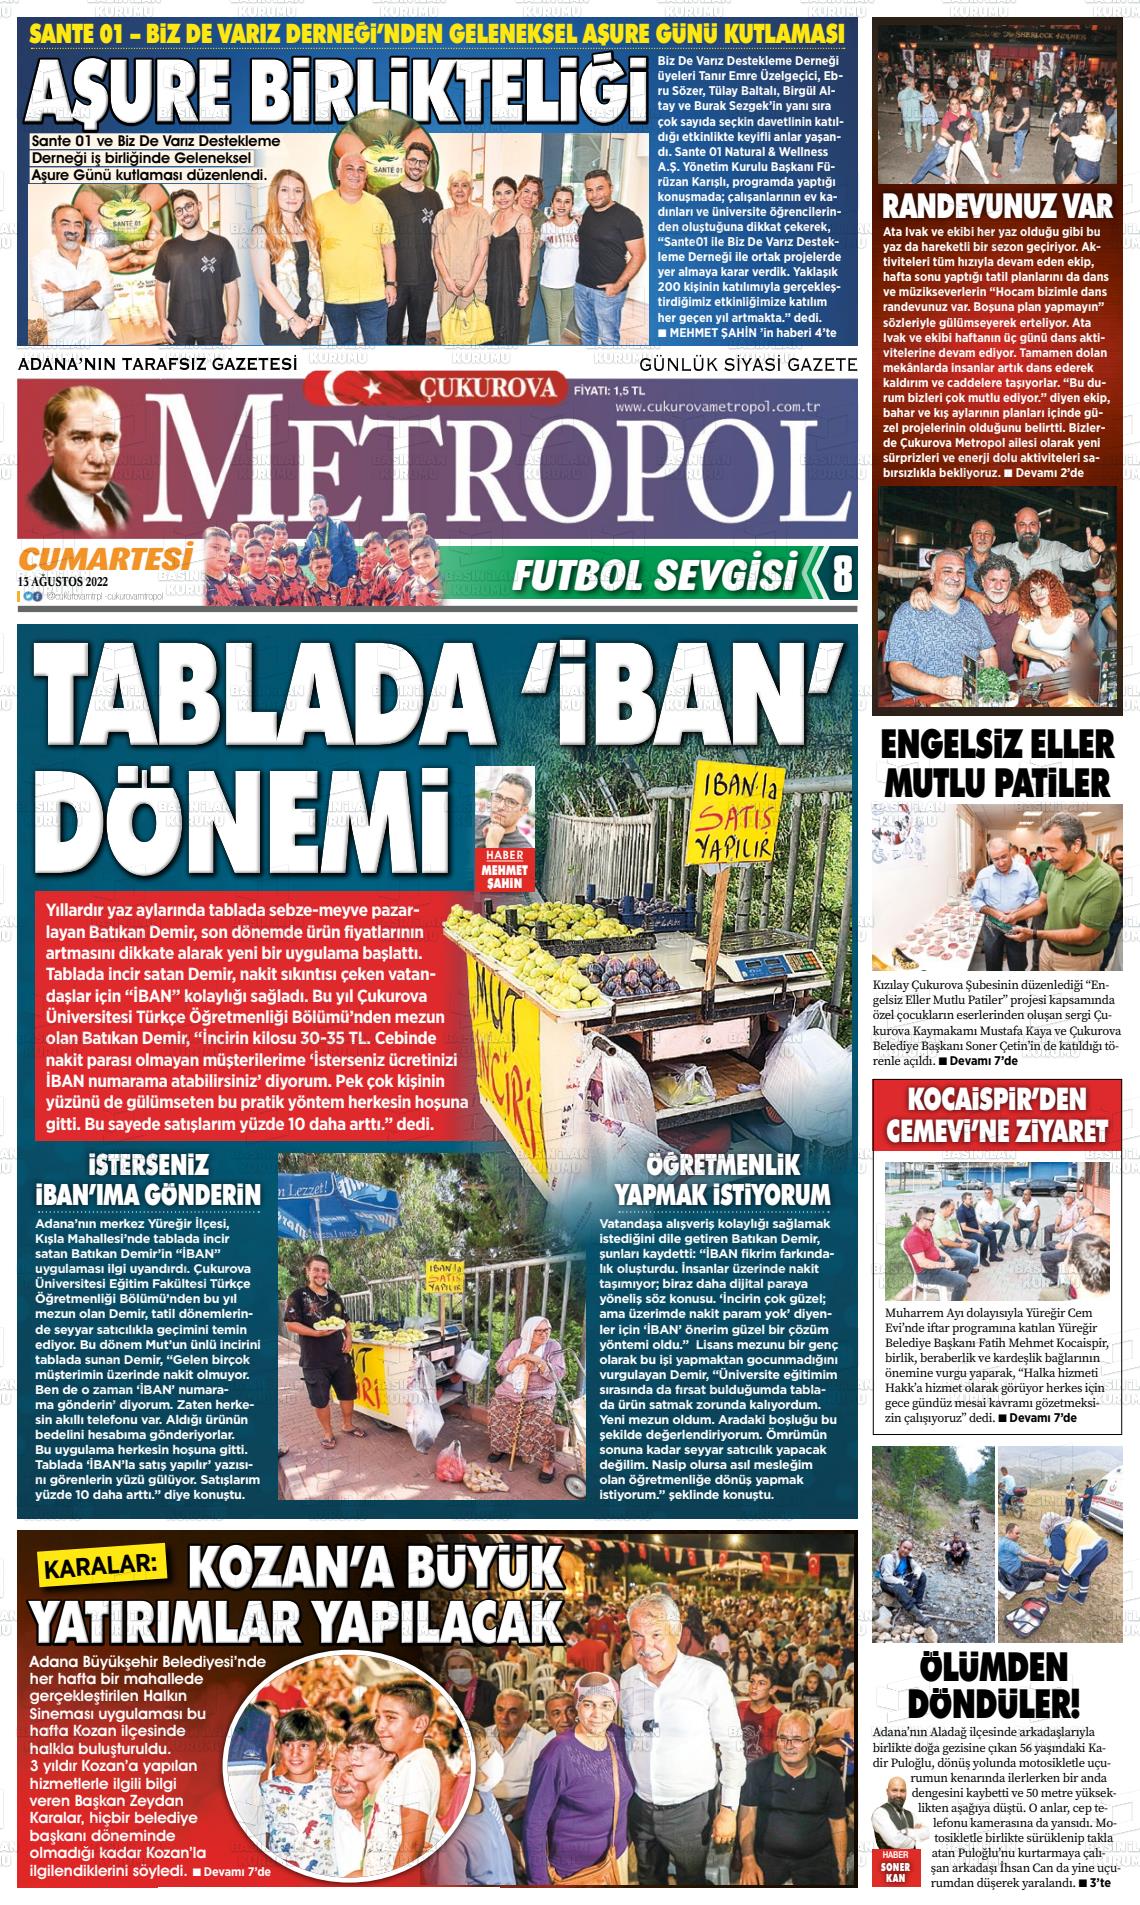 13 Ağustos 2022 Çukurova Metropol Gazete Manşeti